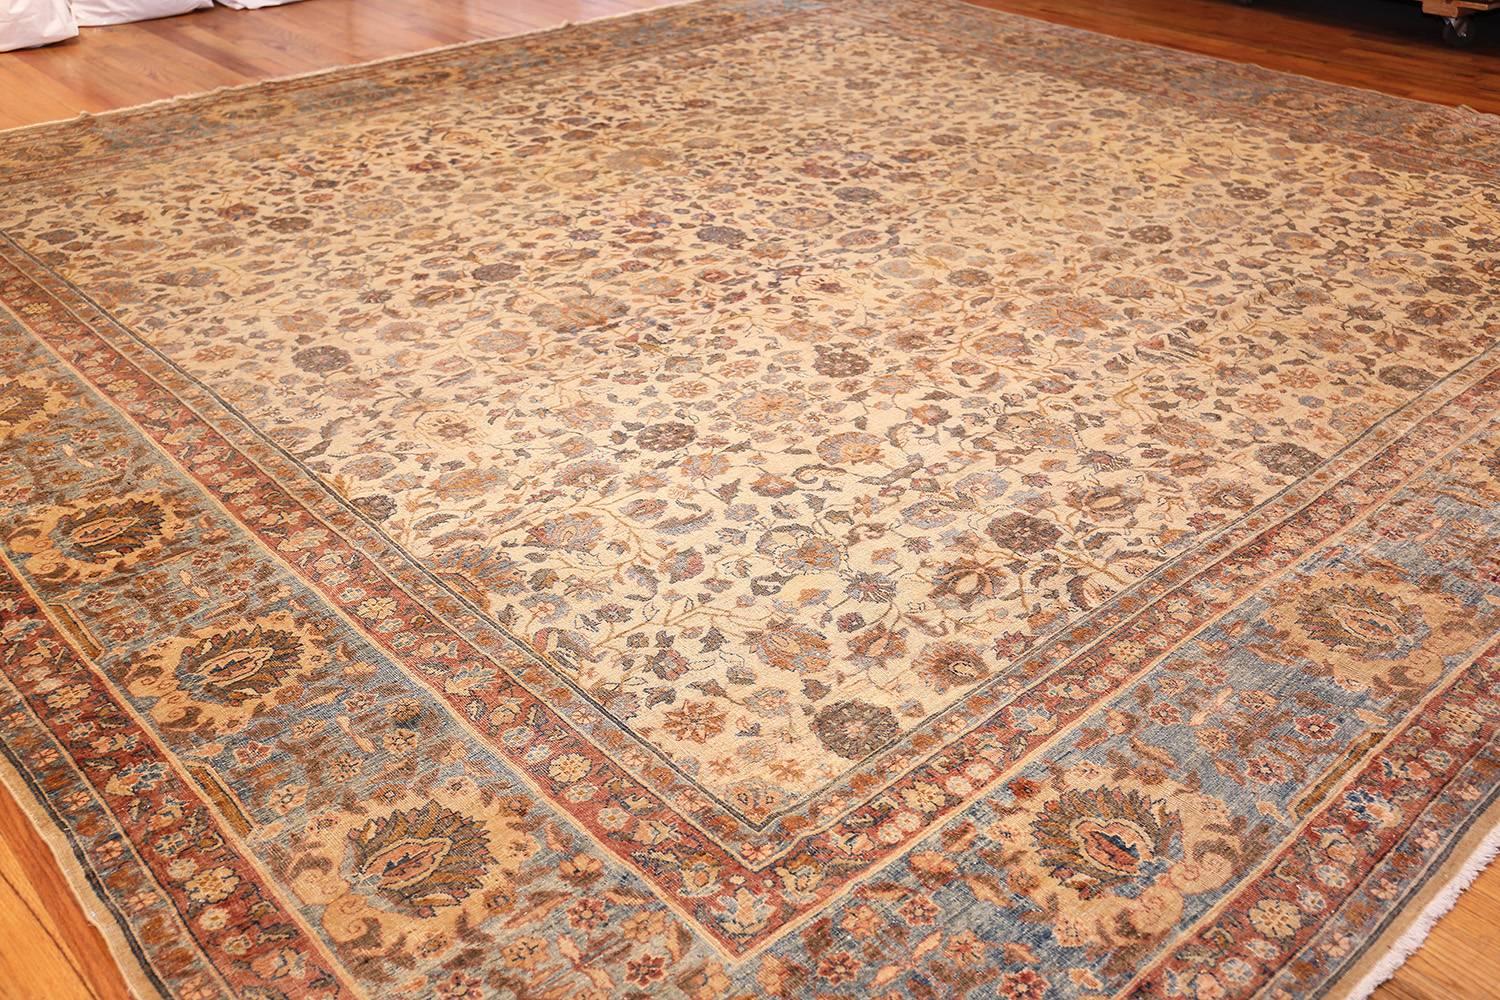 Decorative and Rare Square Size Persian Antique Tabriz Rug. Size: 14' x 14' 6